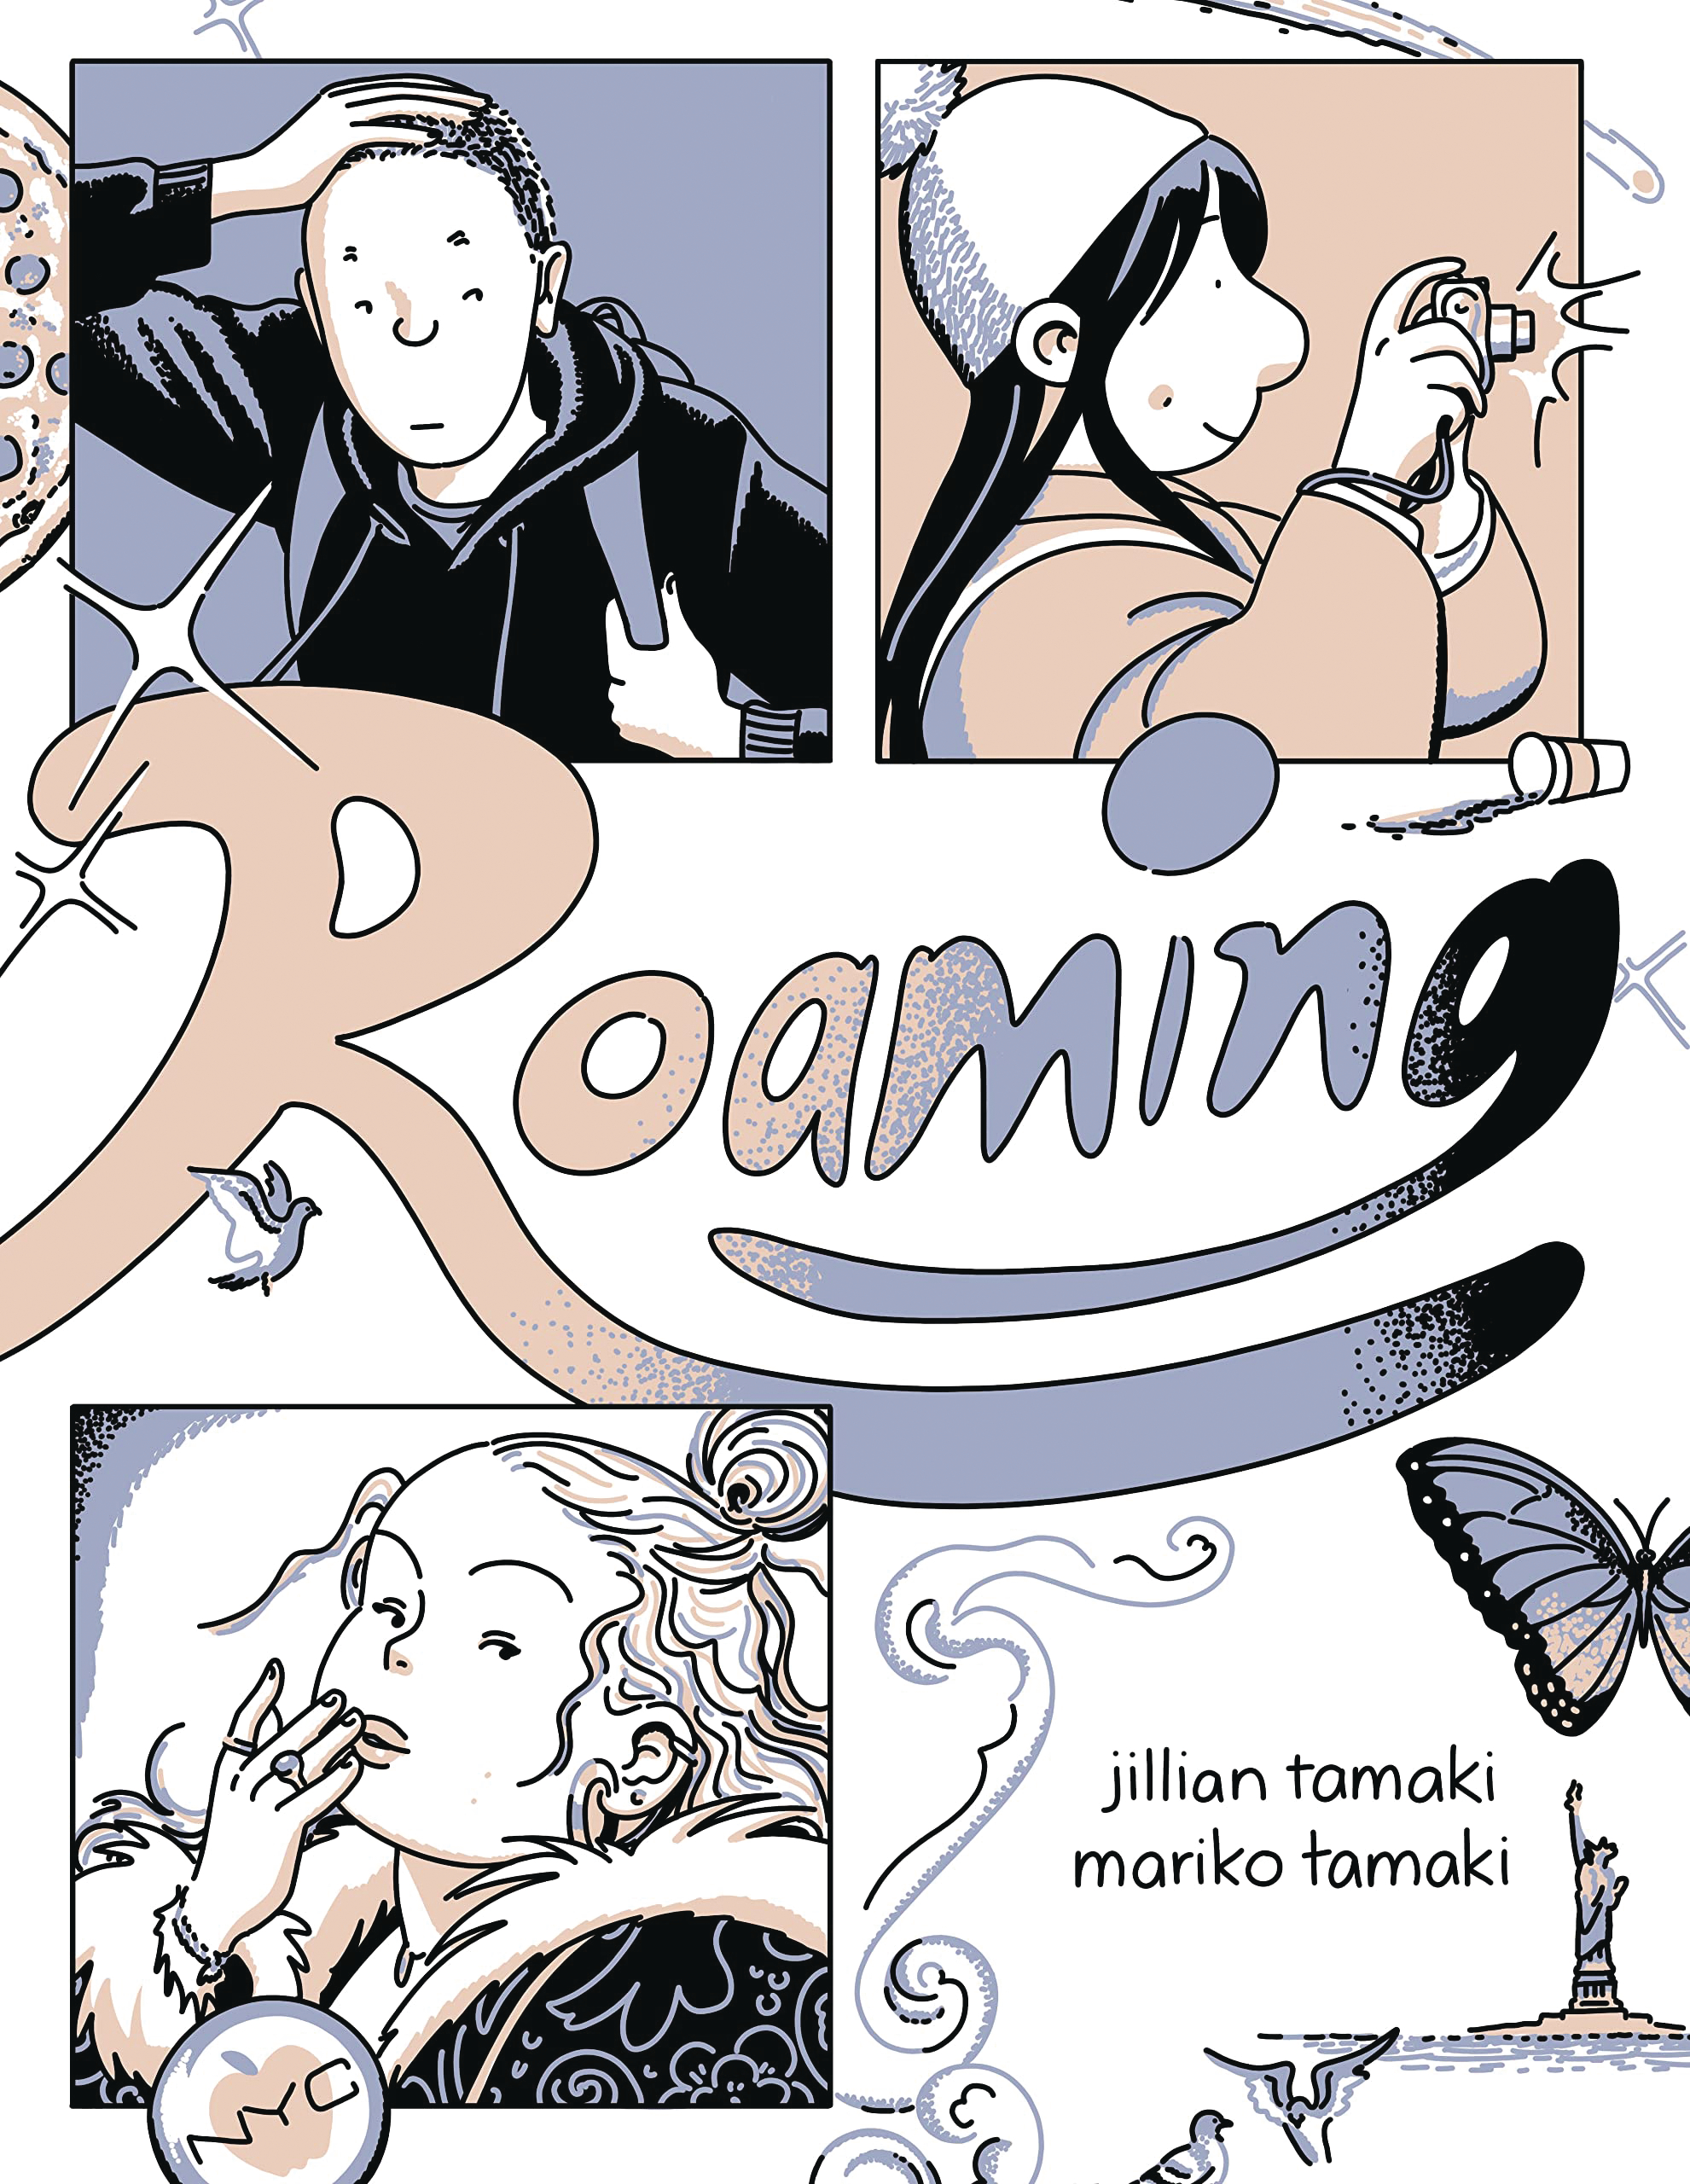 Roaming Graphic Novel (Mature)